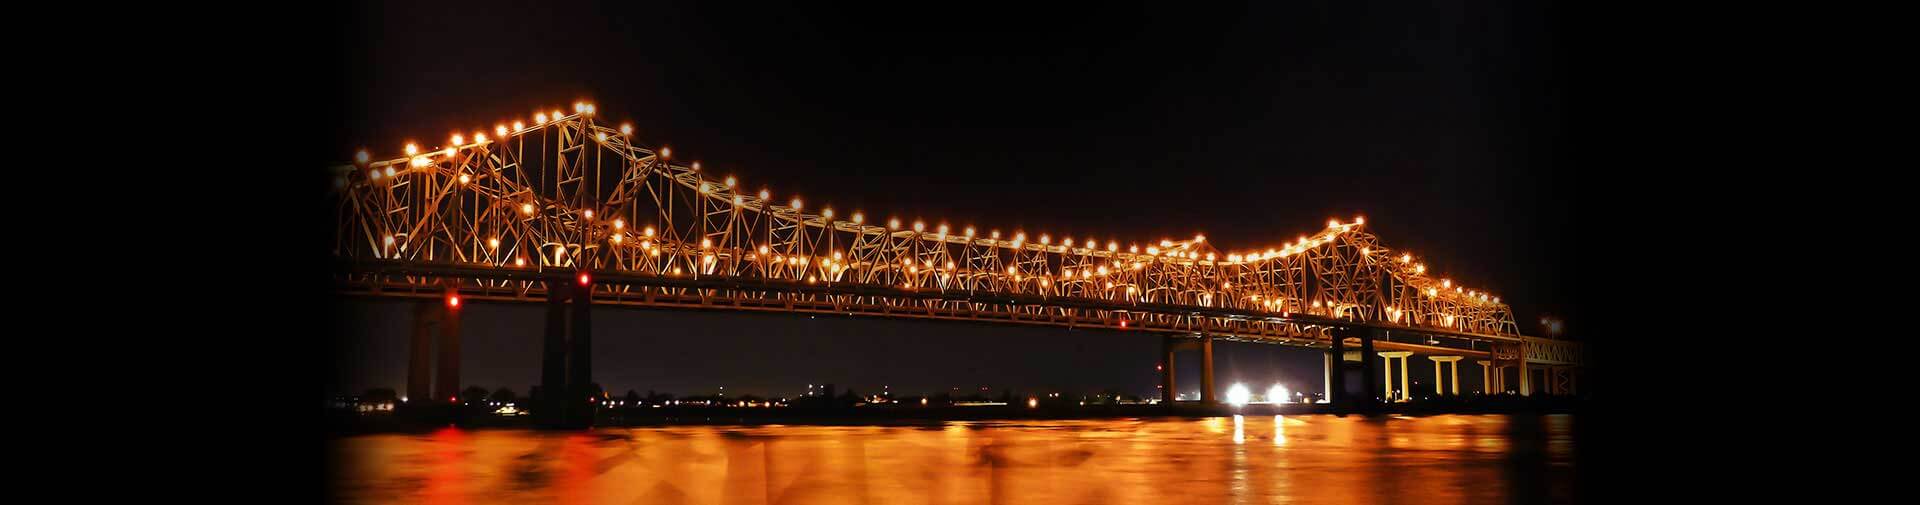 Bridge with lights at night